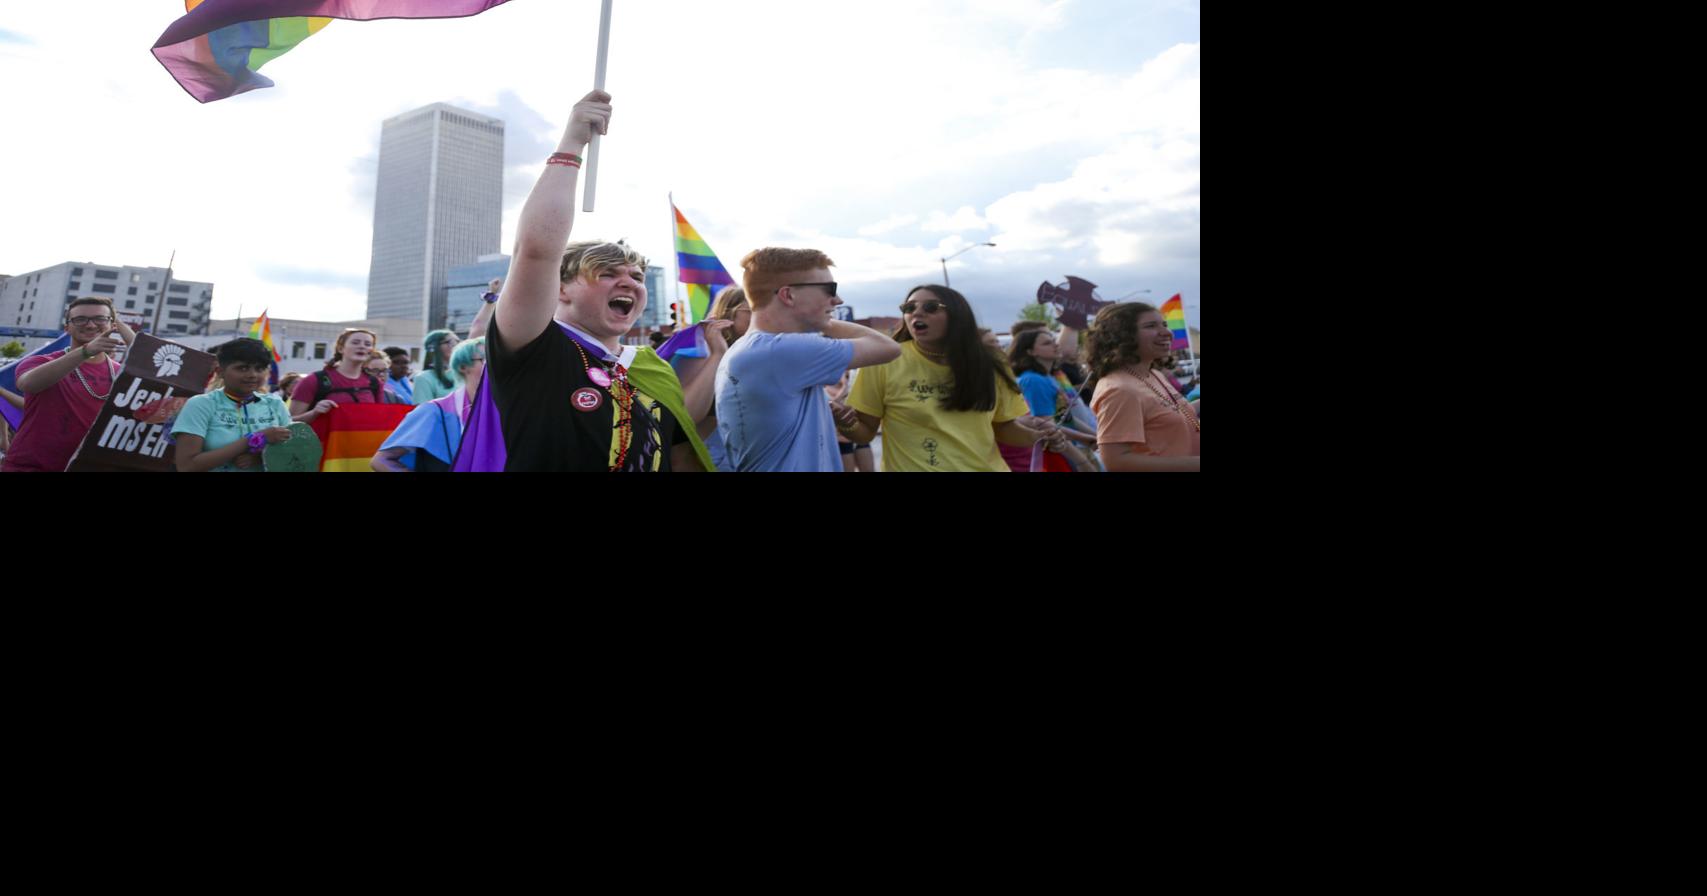 36th Annual Tulsa Pride Events Announced Lifestyles Tulsaworld Com